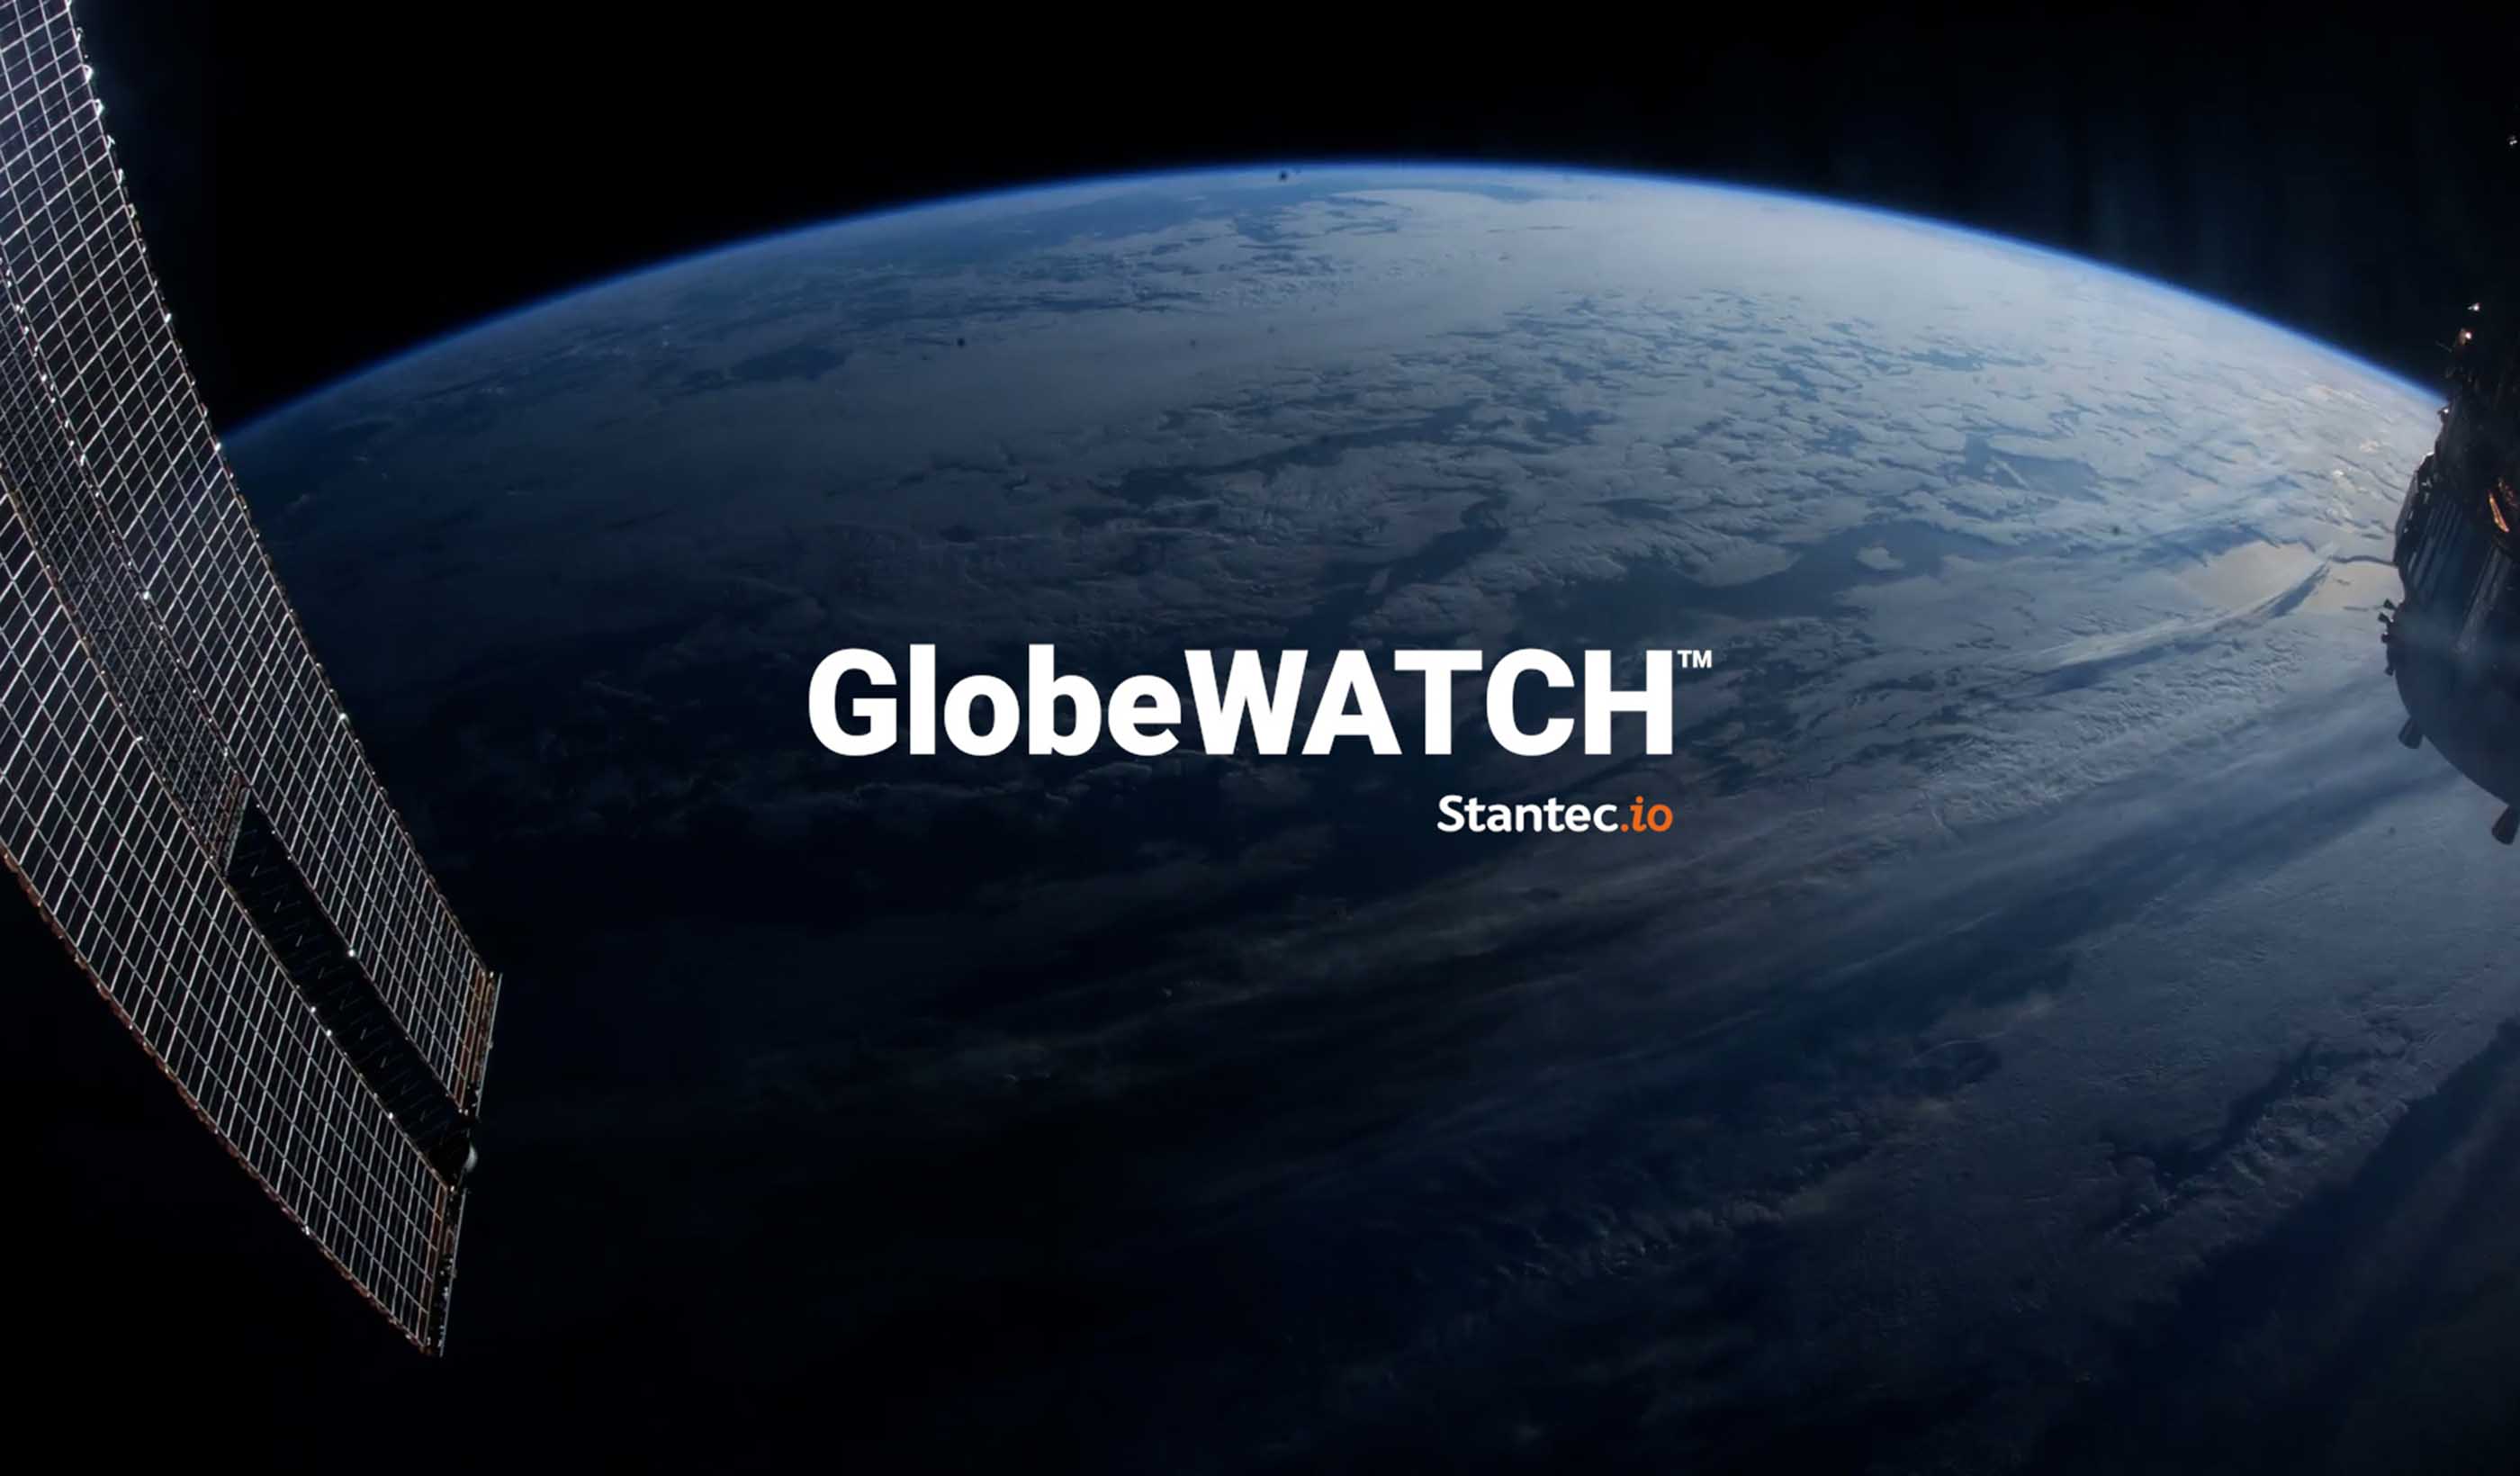 GlobeWATCH: World Leading Remote Sensing Technology